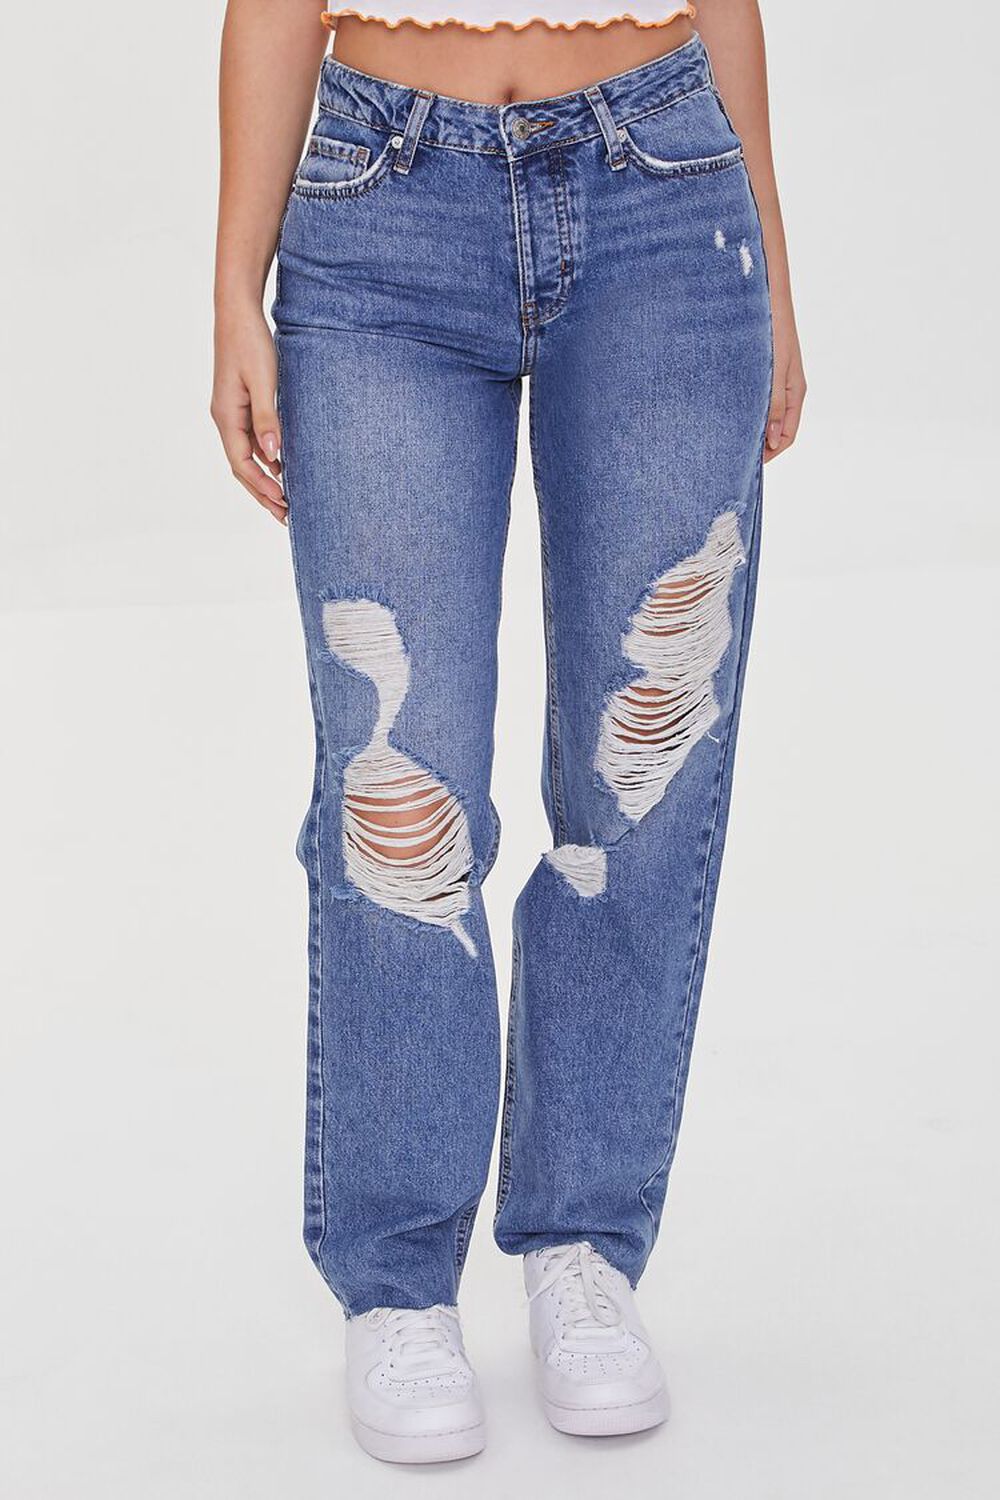 MEDIUM DENIM Distressed Boyfriend Long Jeans, image 2